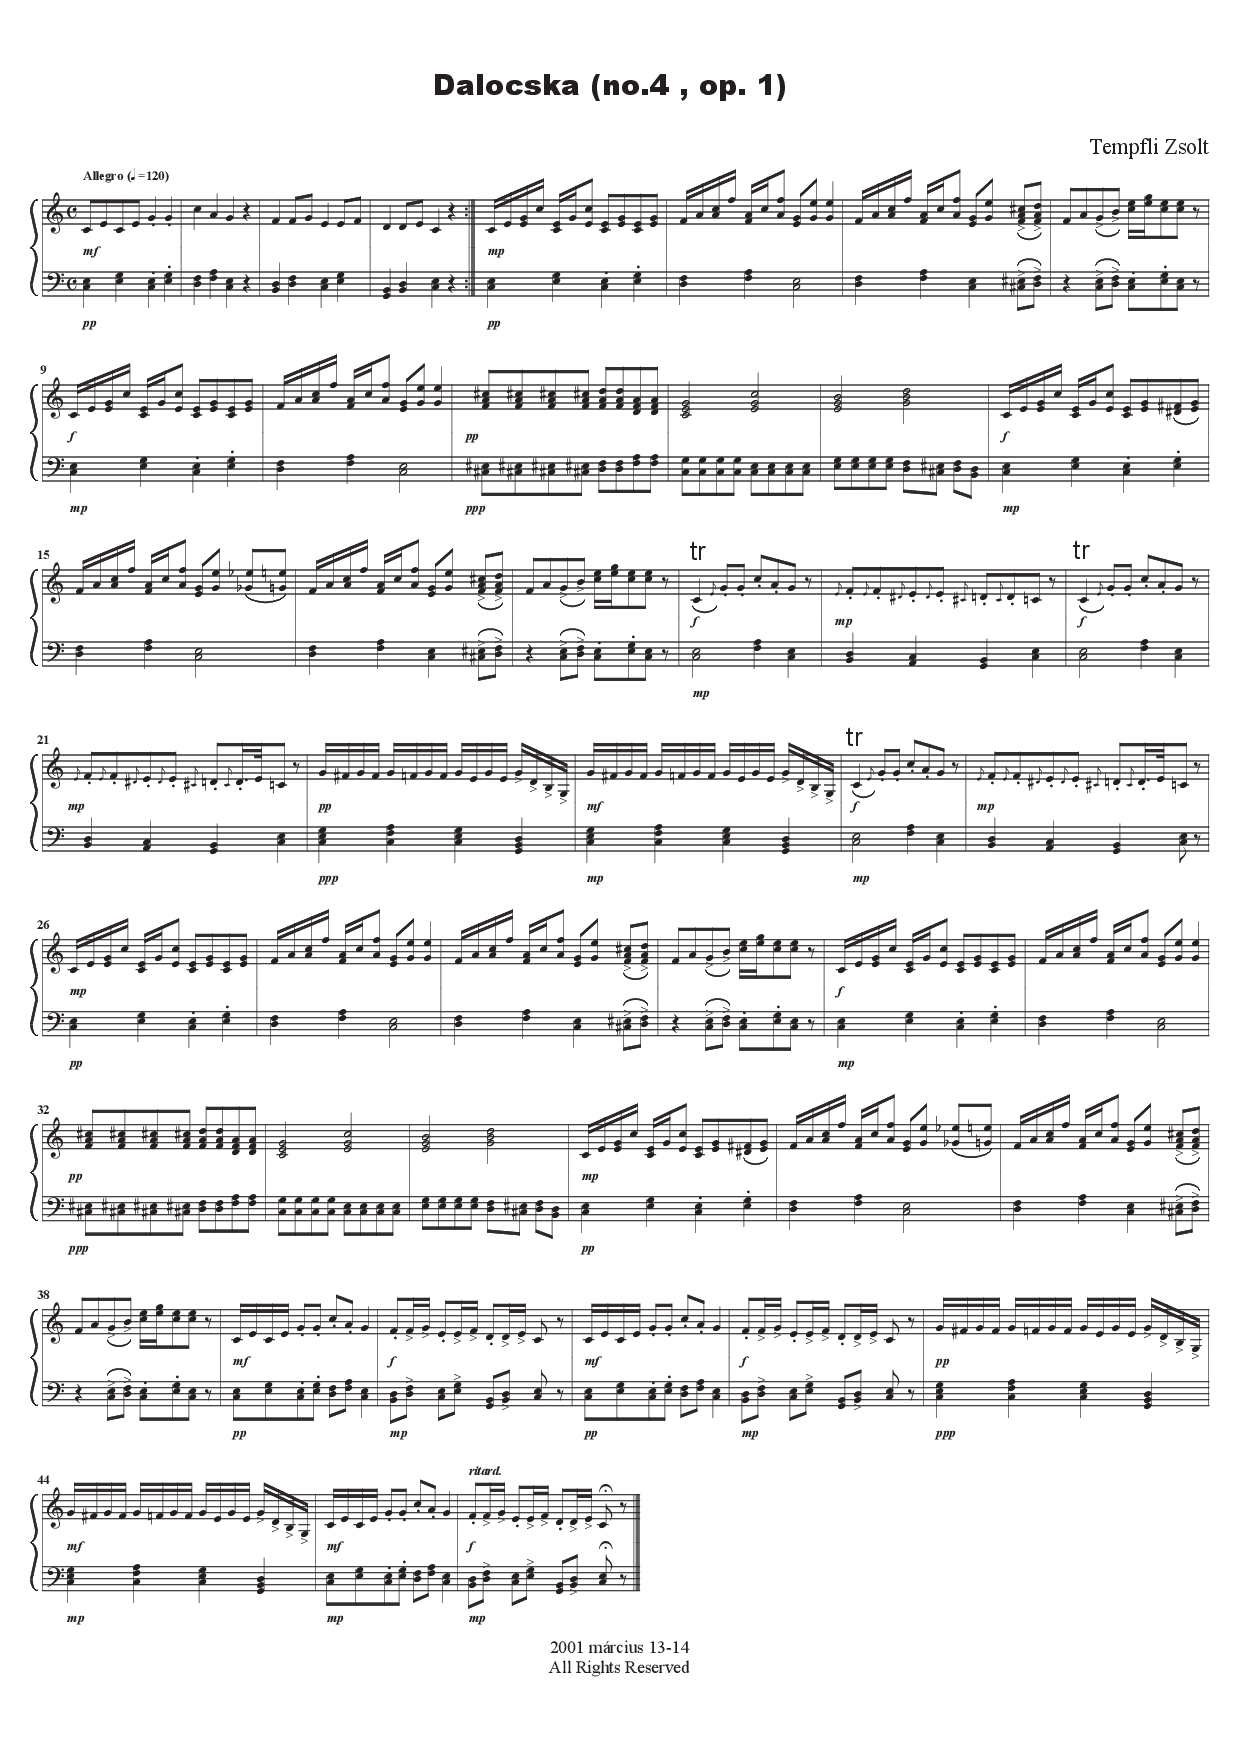 Zsolt Tempfli: Song no. 4 (op. 1 no. 4) for piano